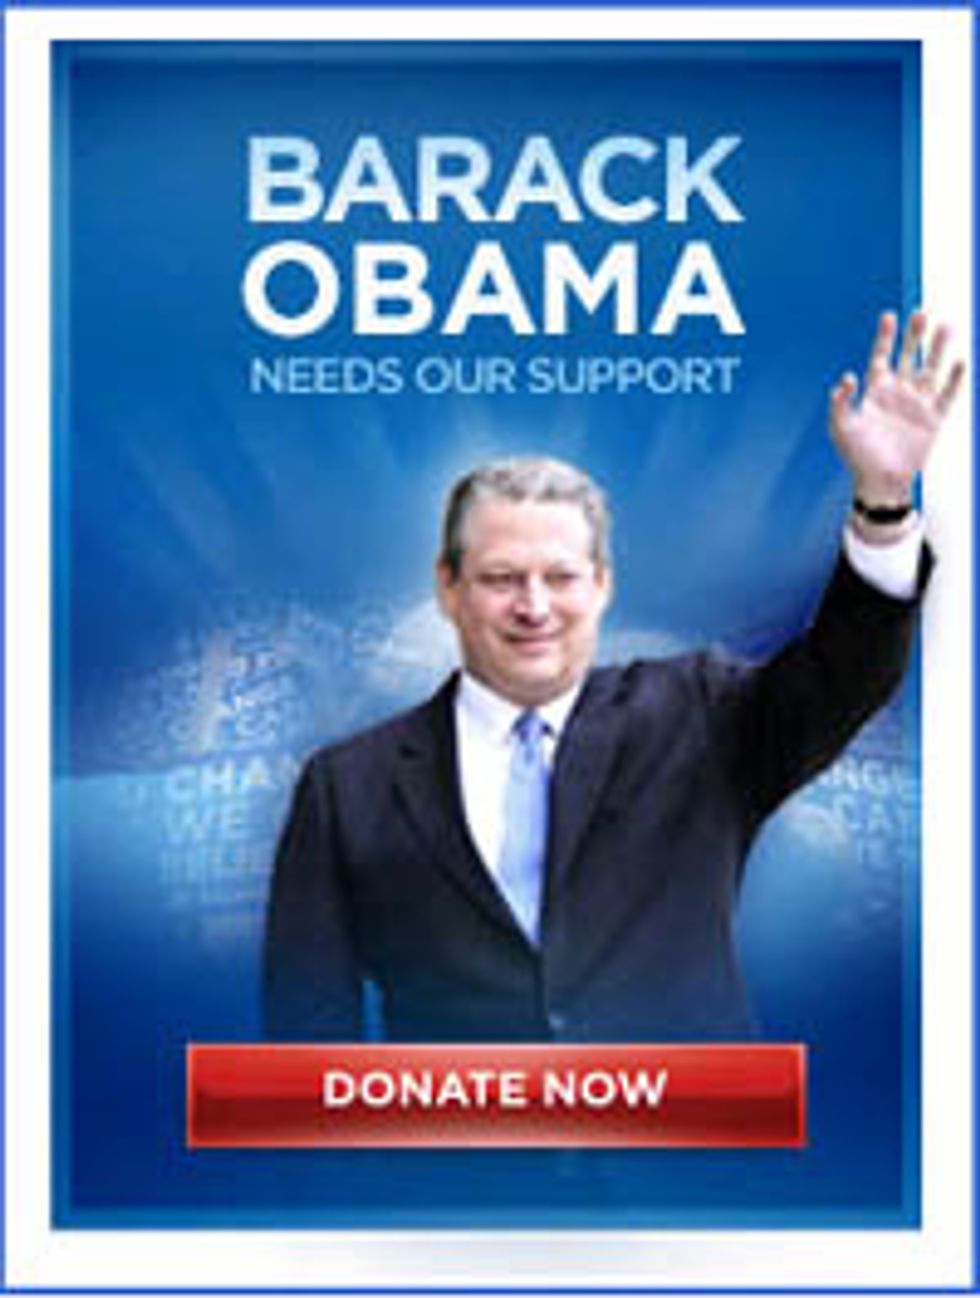 Al Gore Endorses Obama!